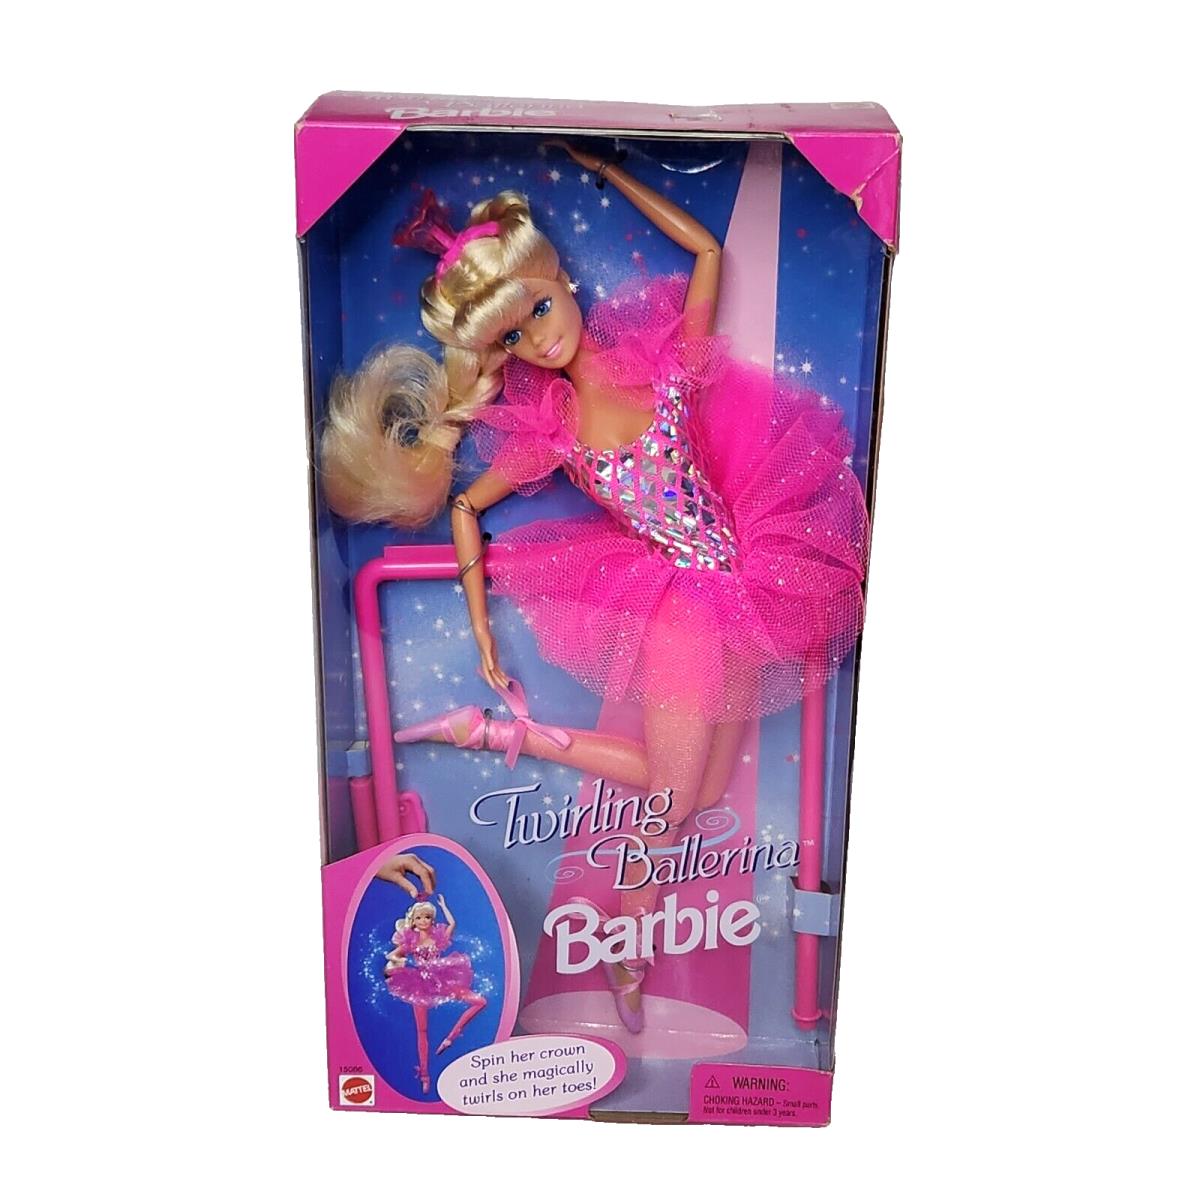 Vintage 1995 Twirling Ballerina Barbie Doll Mattel 15086 IN Box